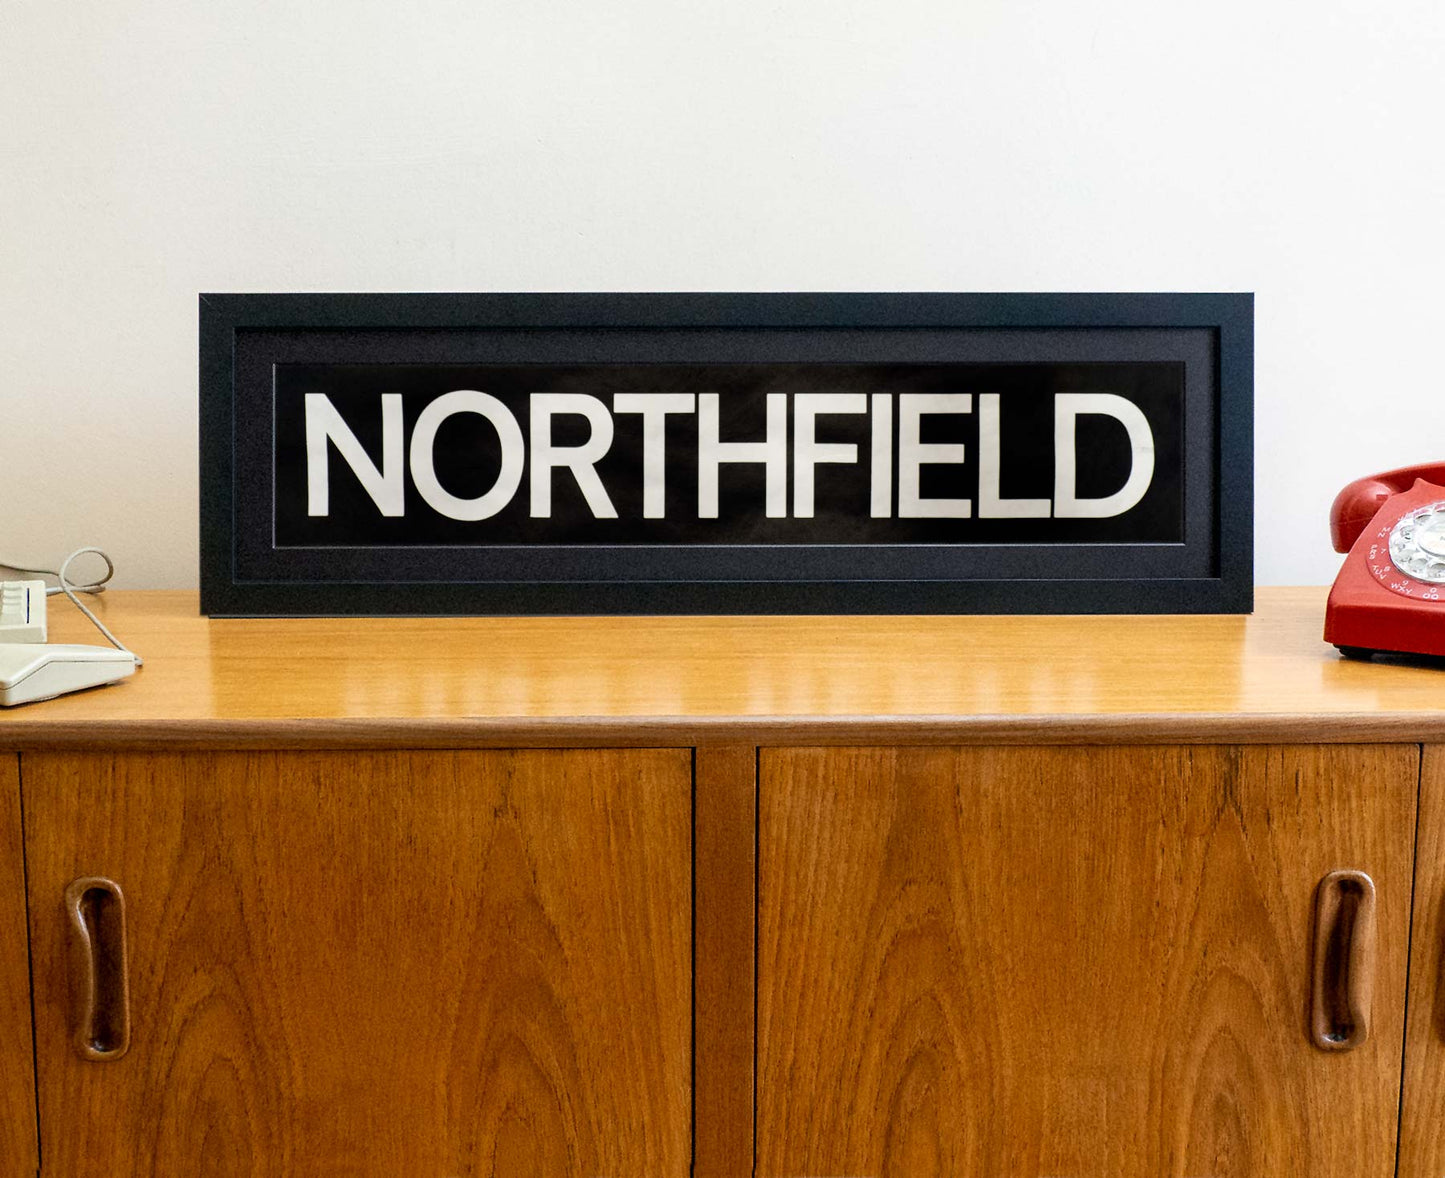 Northfield 1990s framed original bus blind